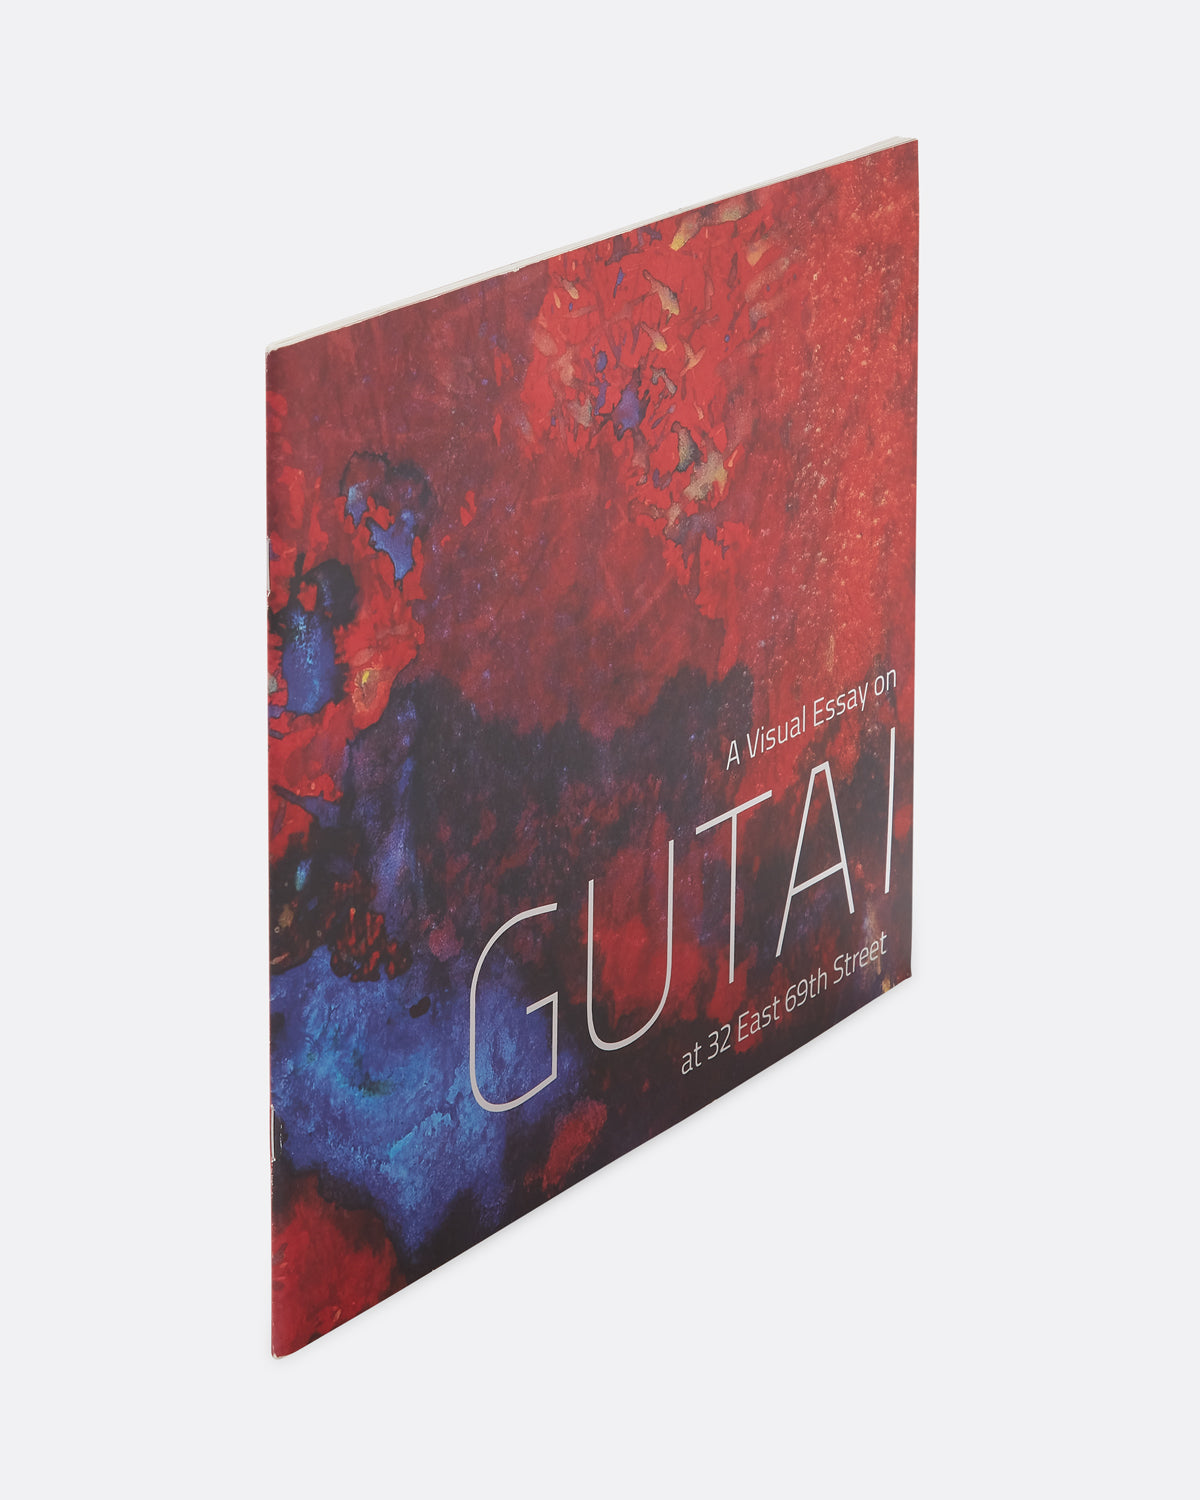 Gutai: A Visual Essay on Gutai at 32 East 69th Street